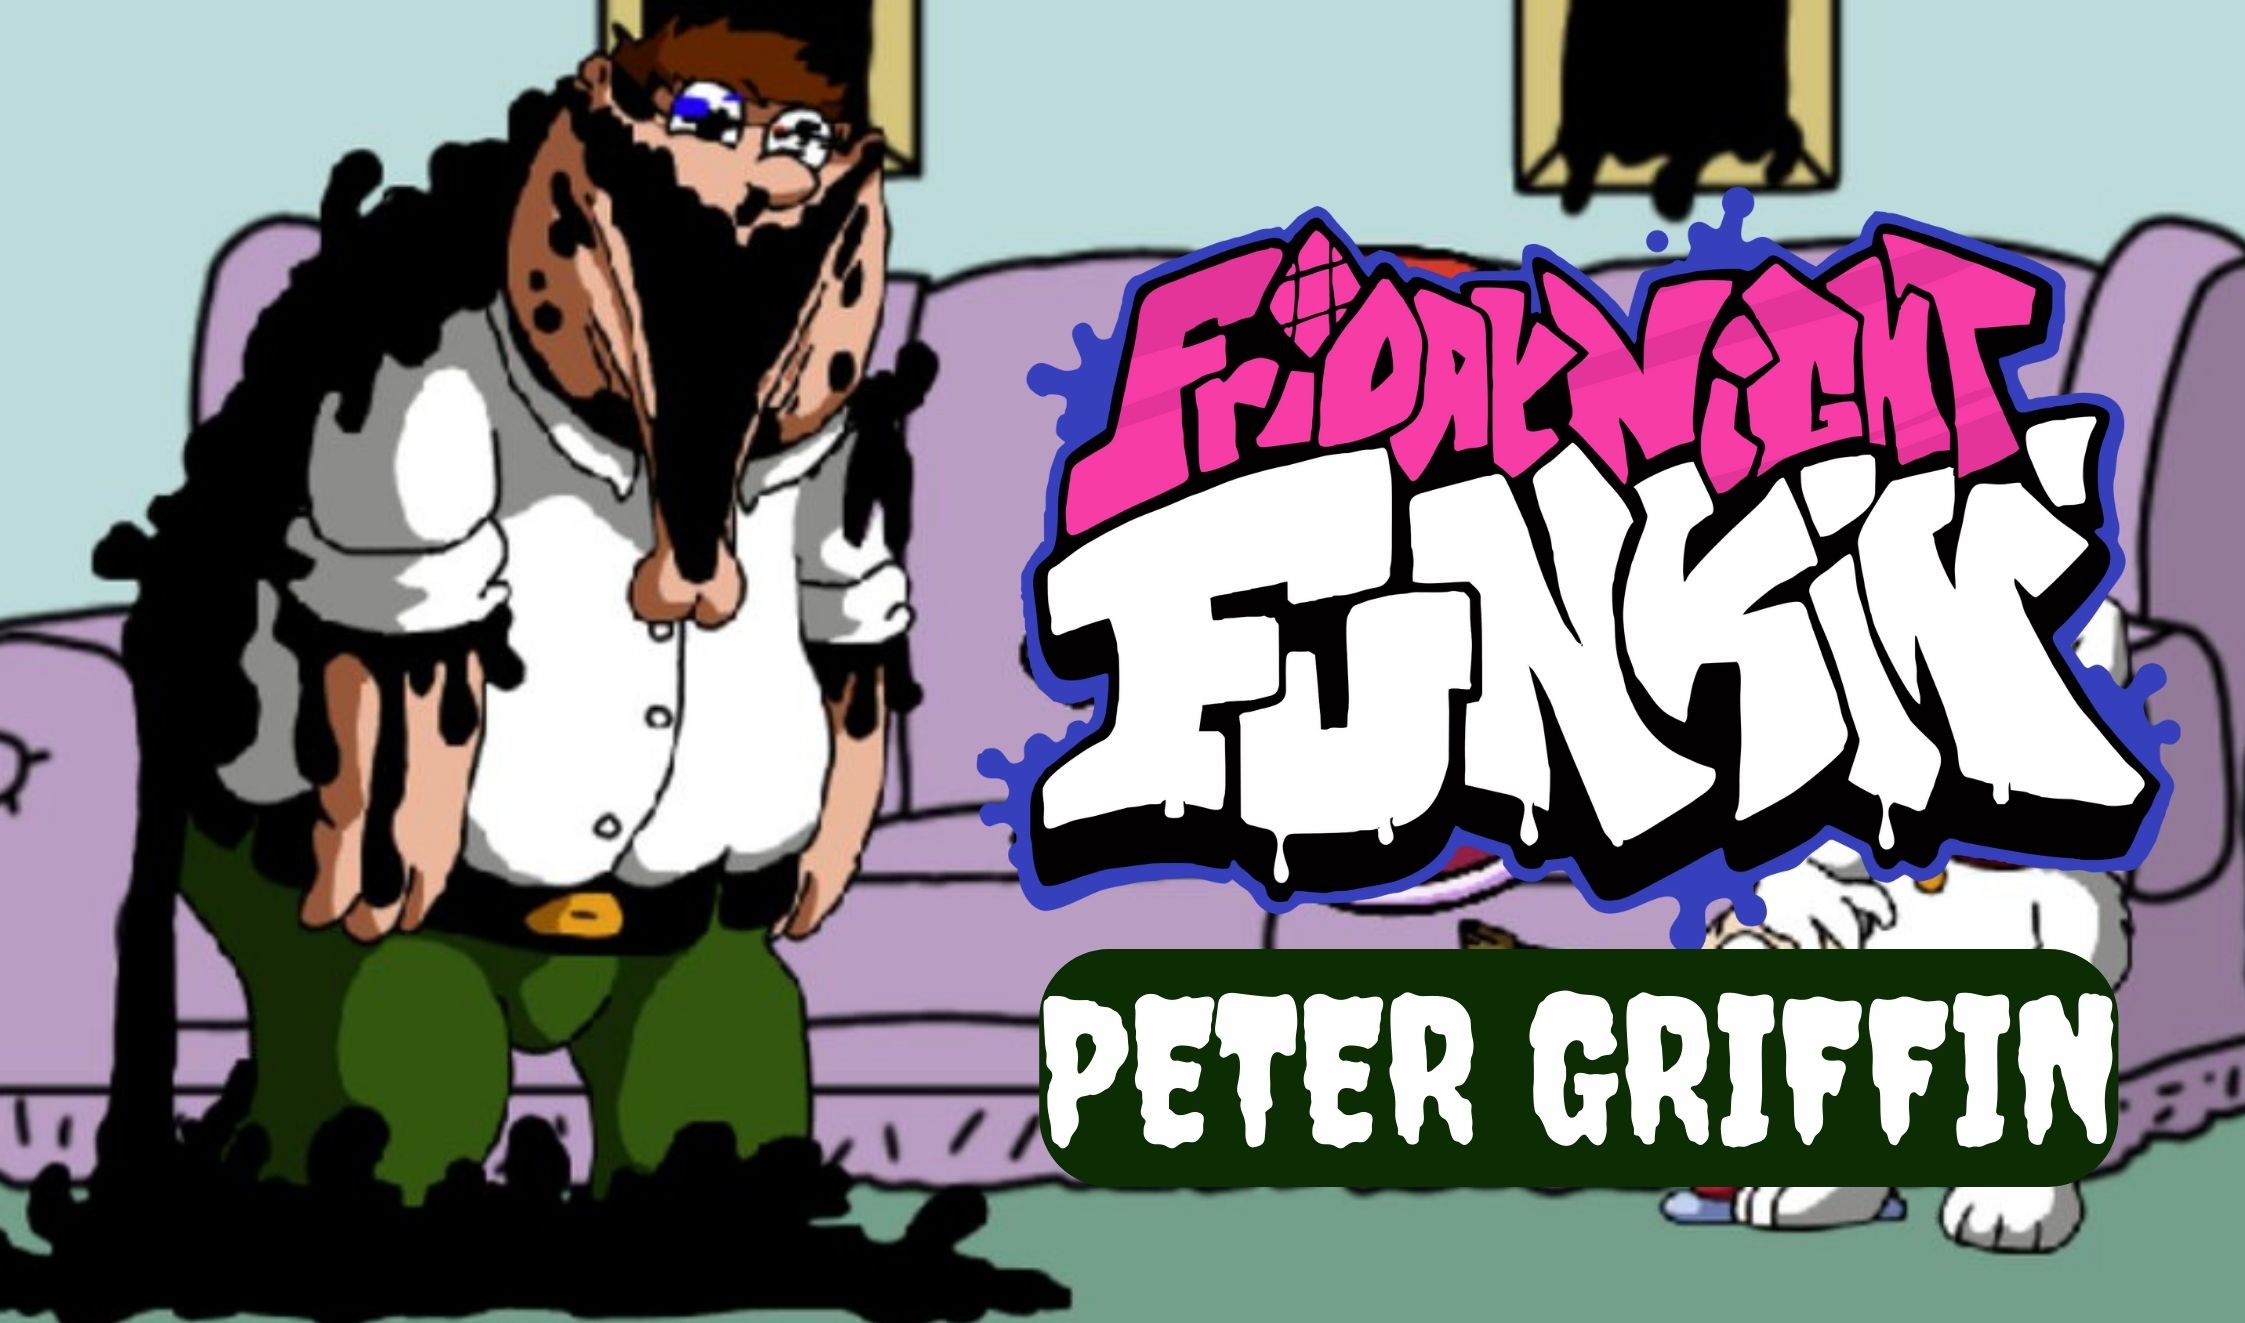 FNF VS PIBBY PETER (FAMILY GUY) free online game on